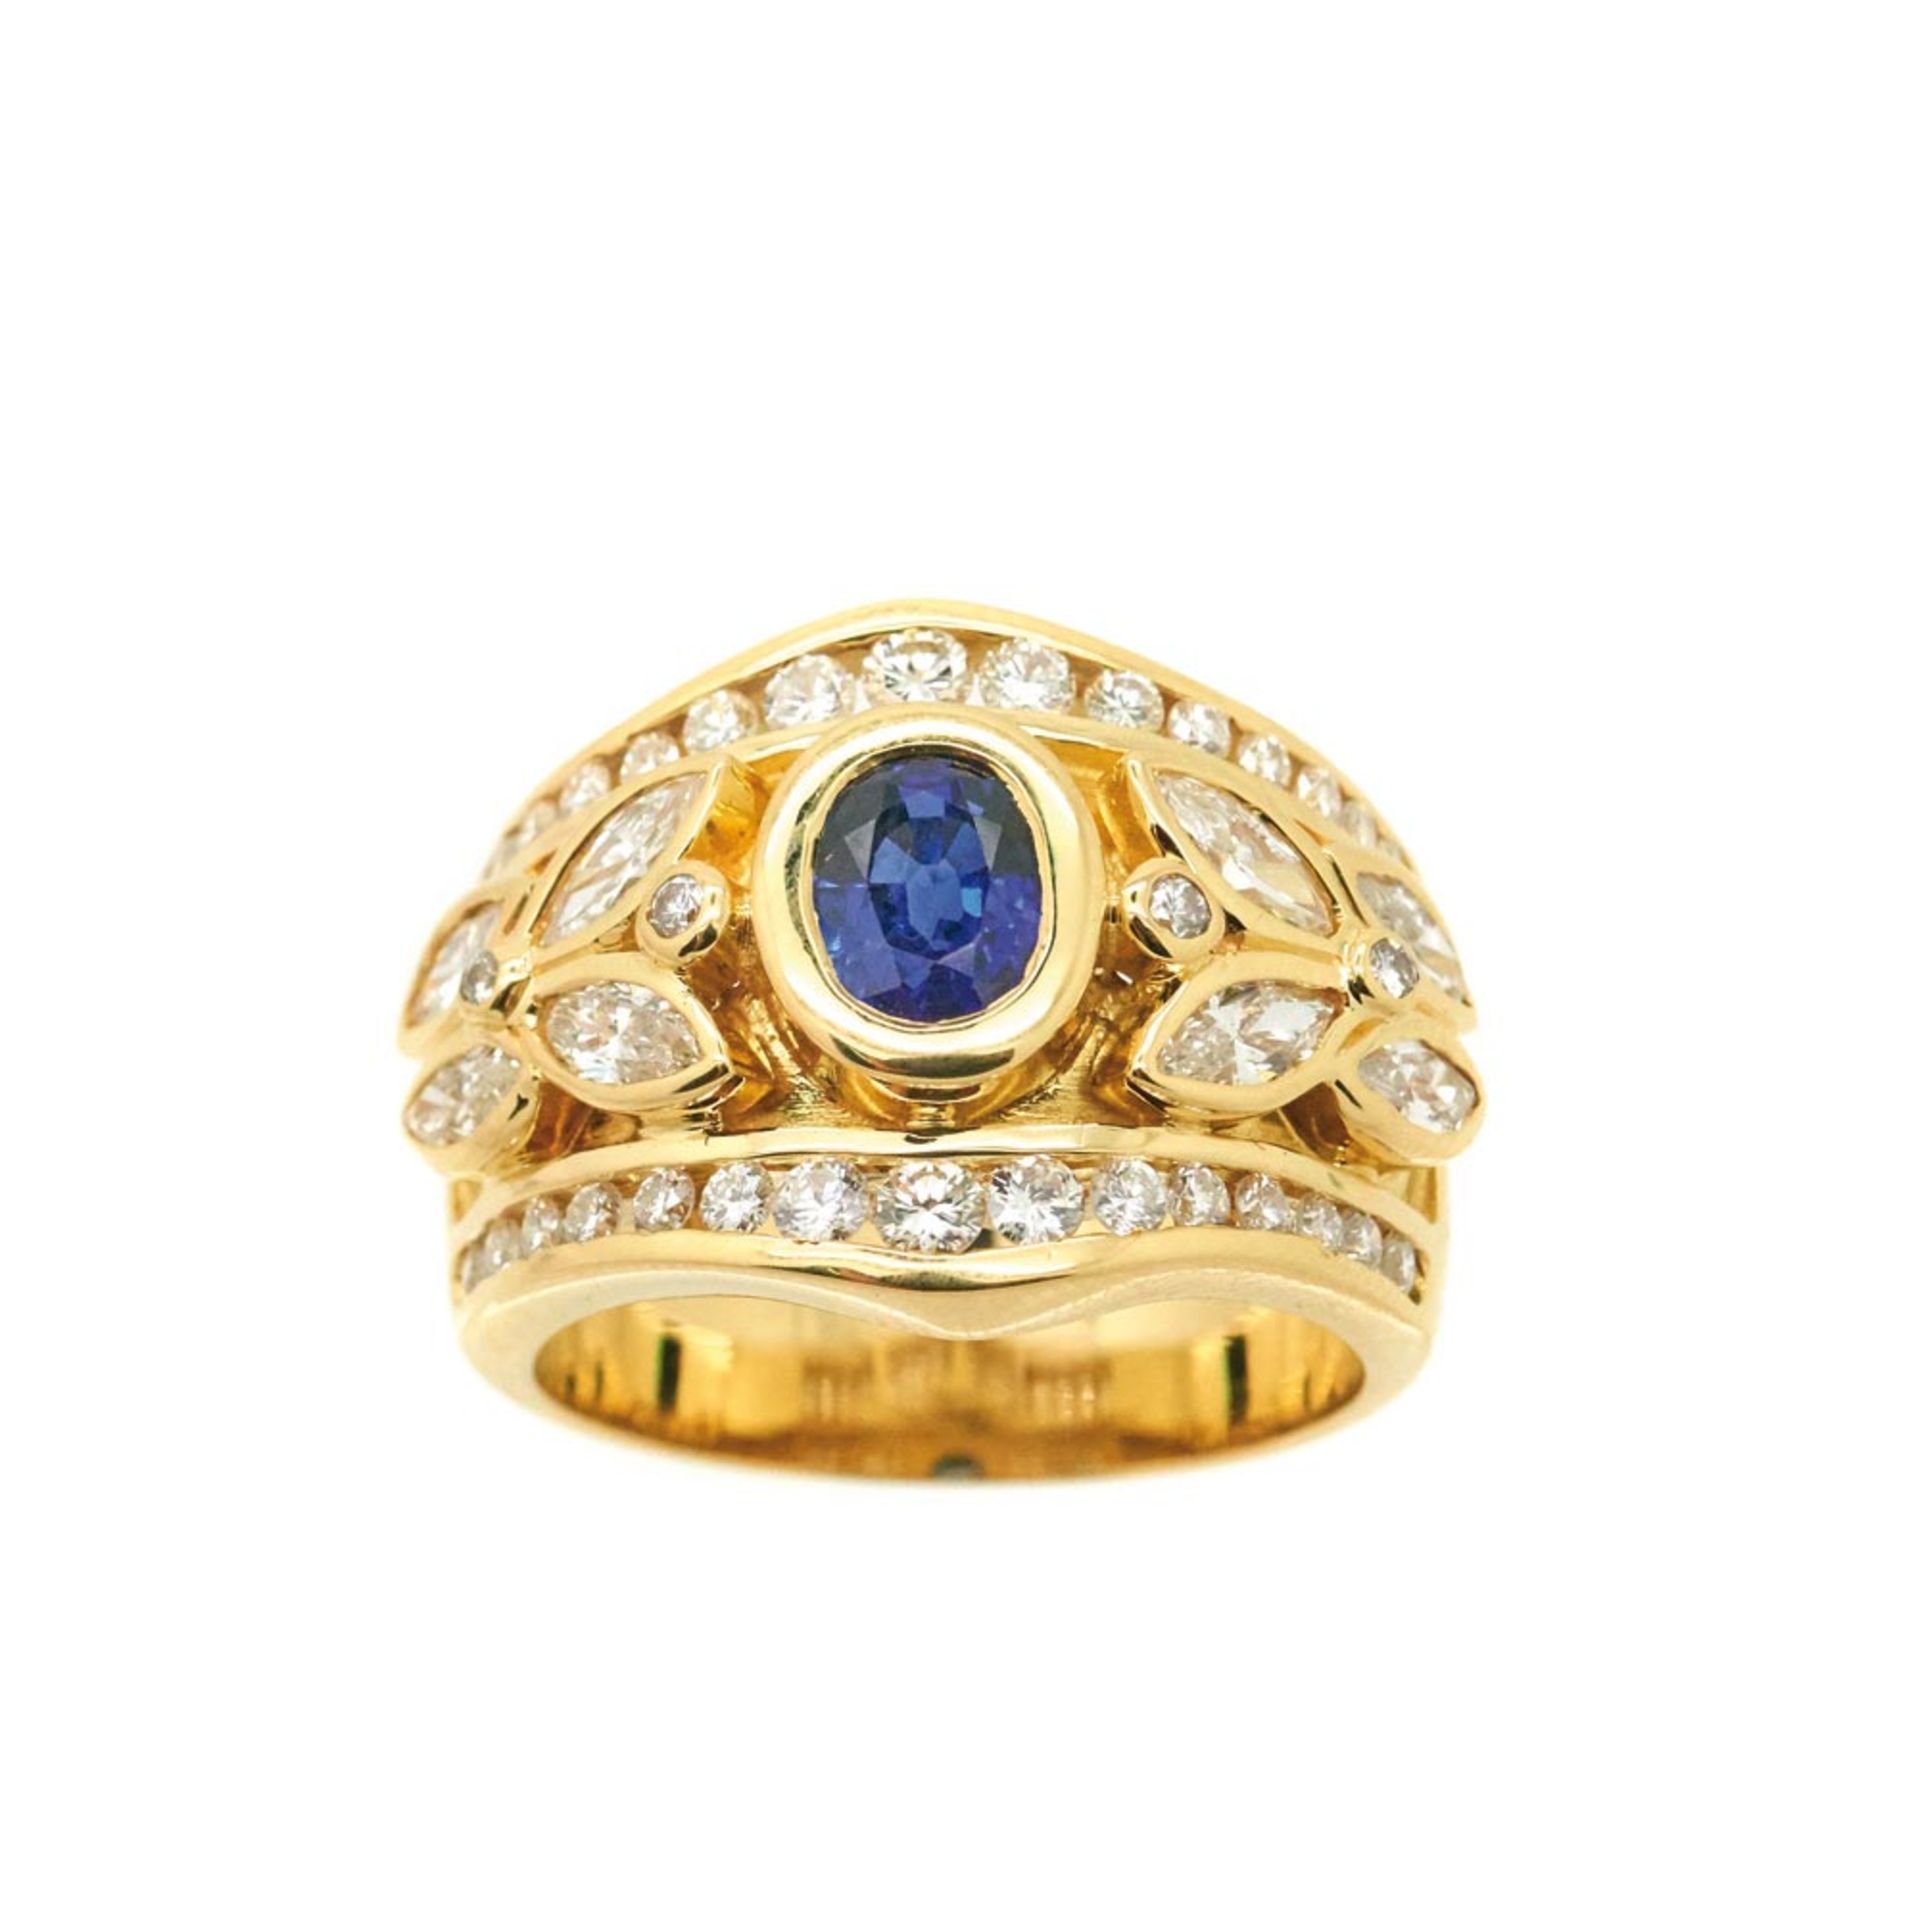 Alen Dione gold, sapphire and diamonds ring